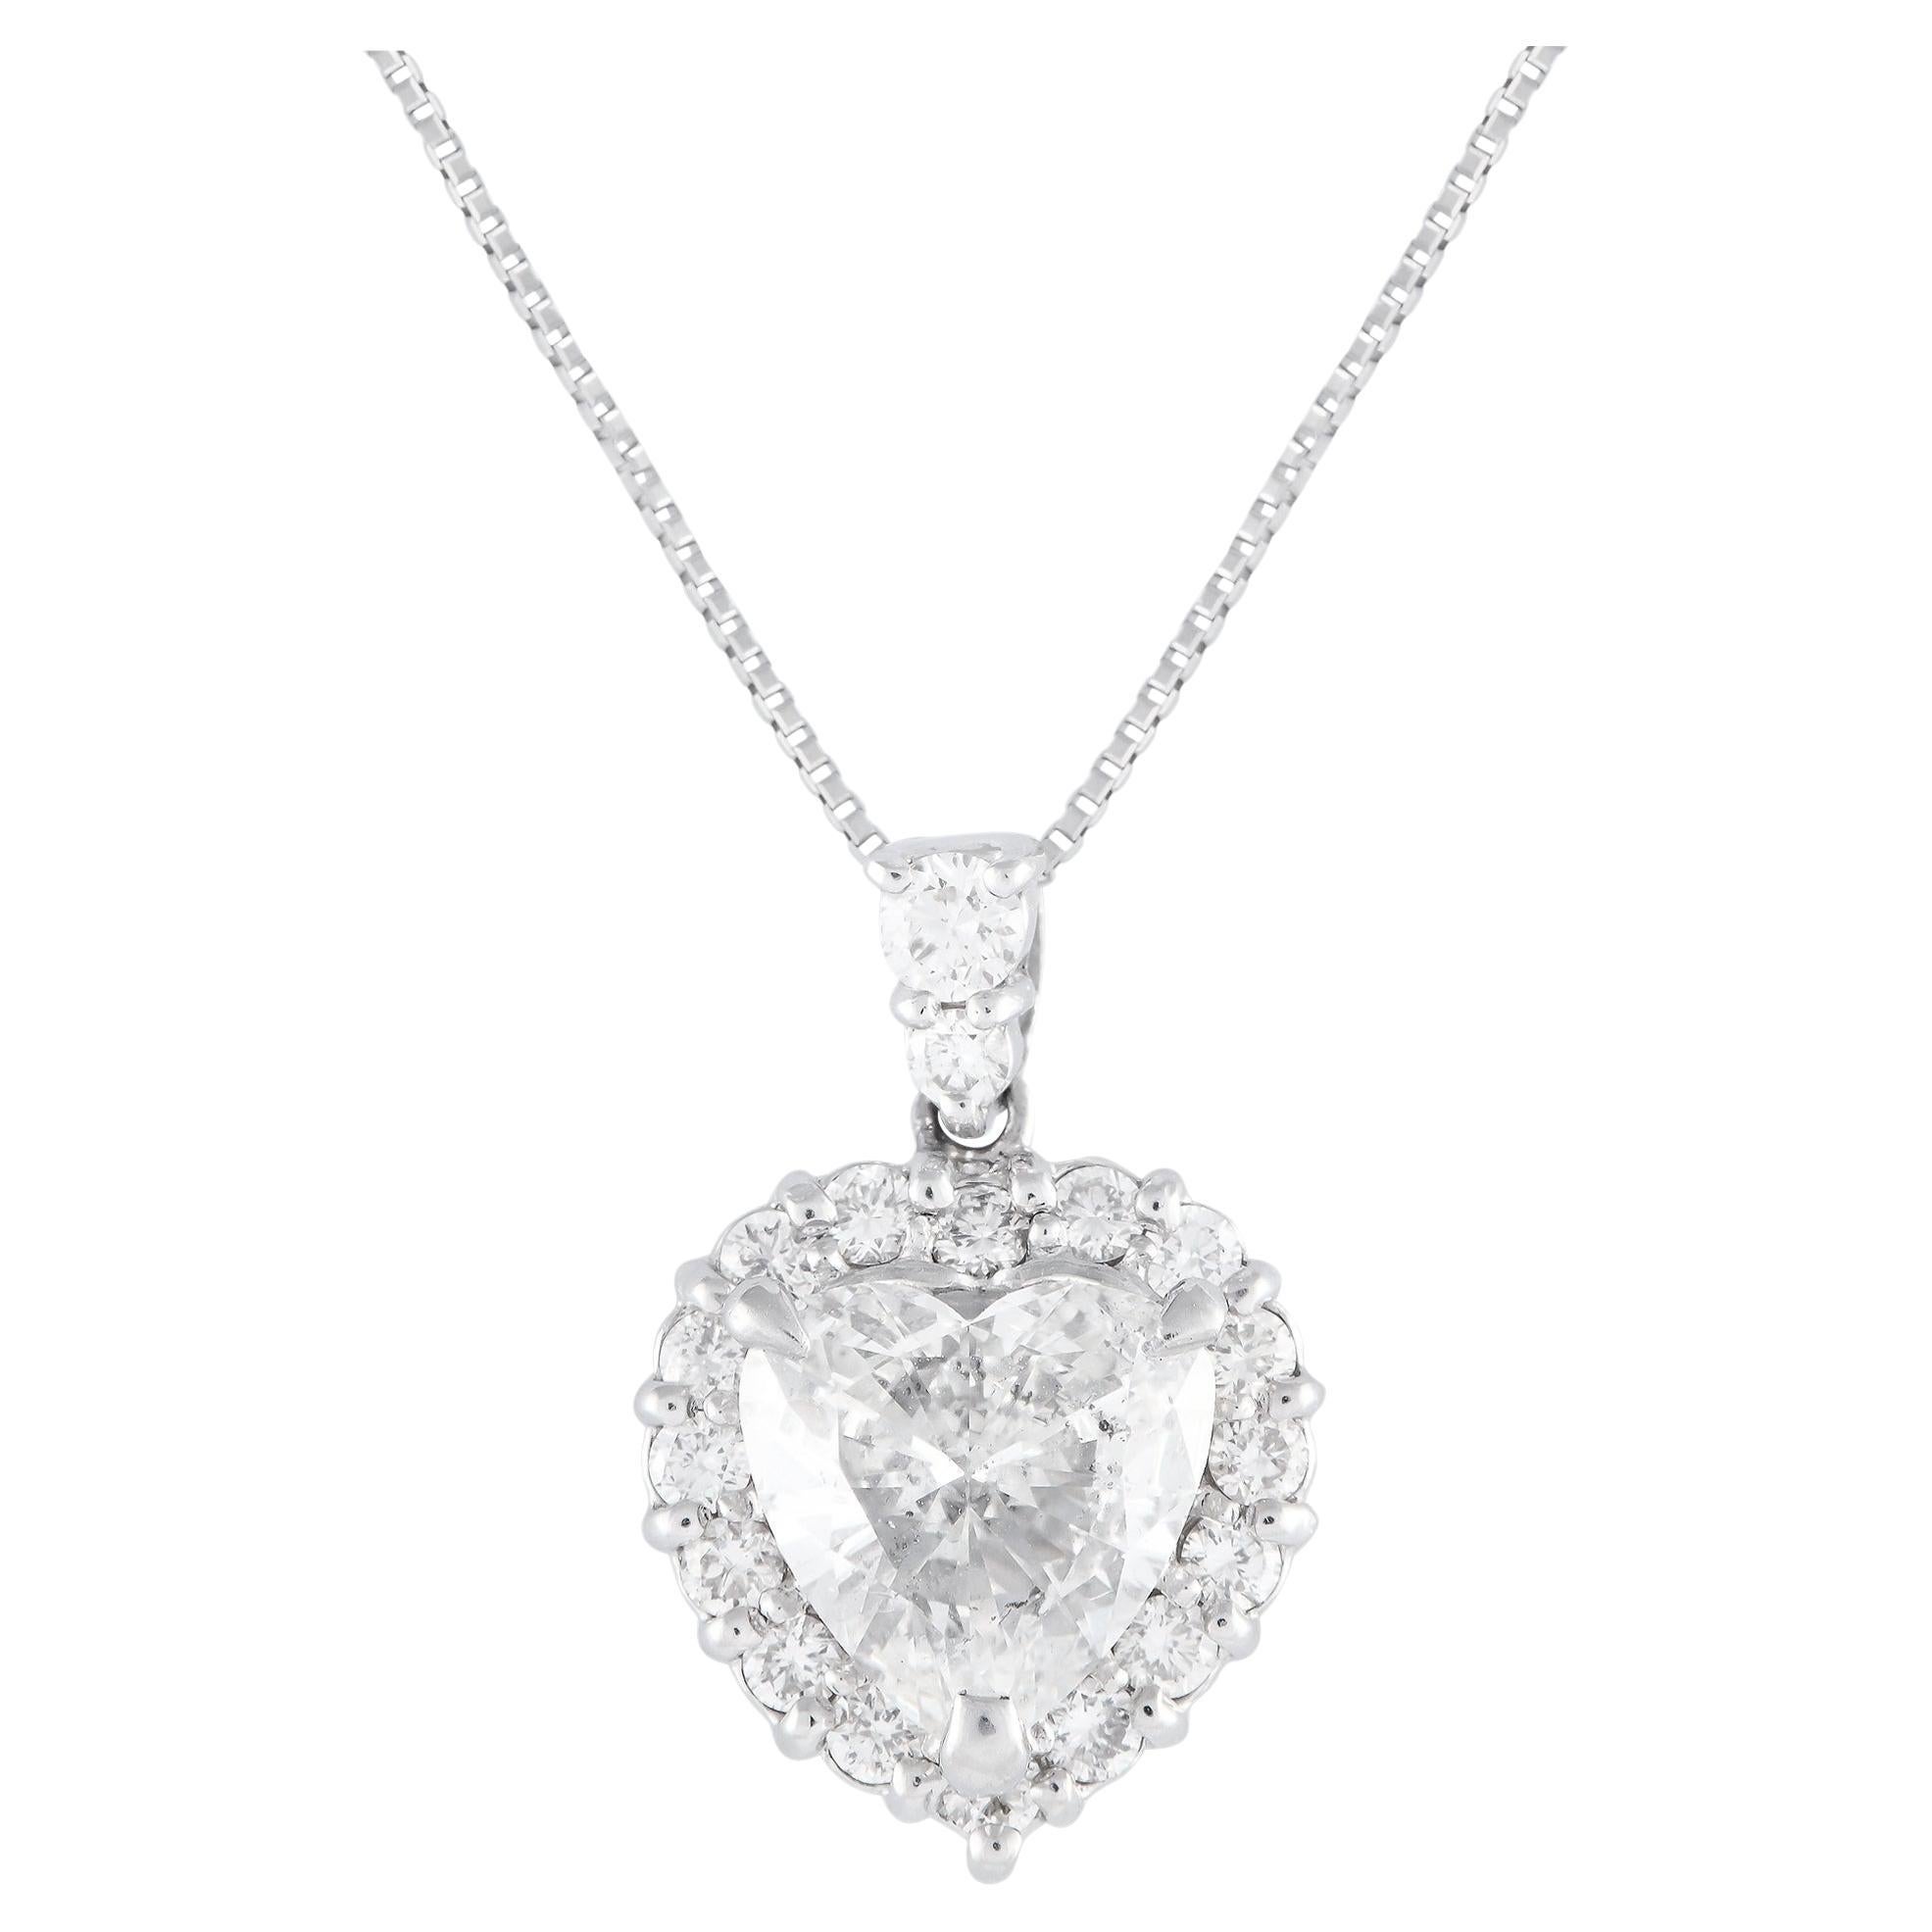 18K White Gold 1.33ct Diamond Pendant Necklace For Sale